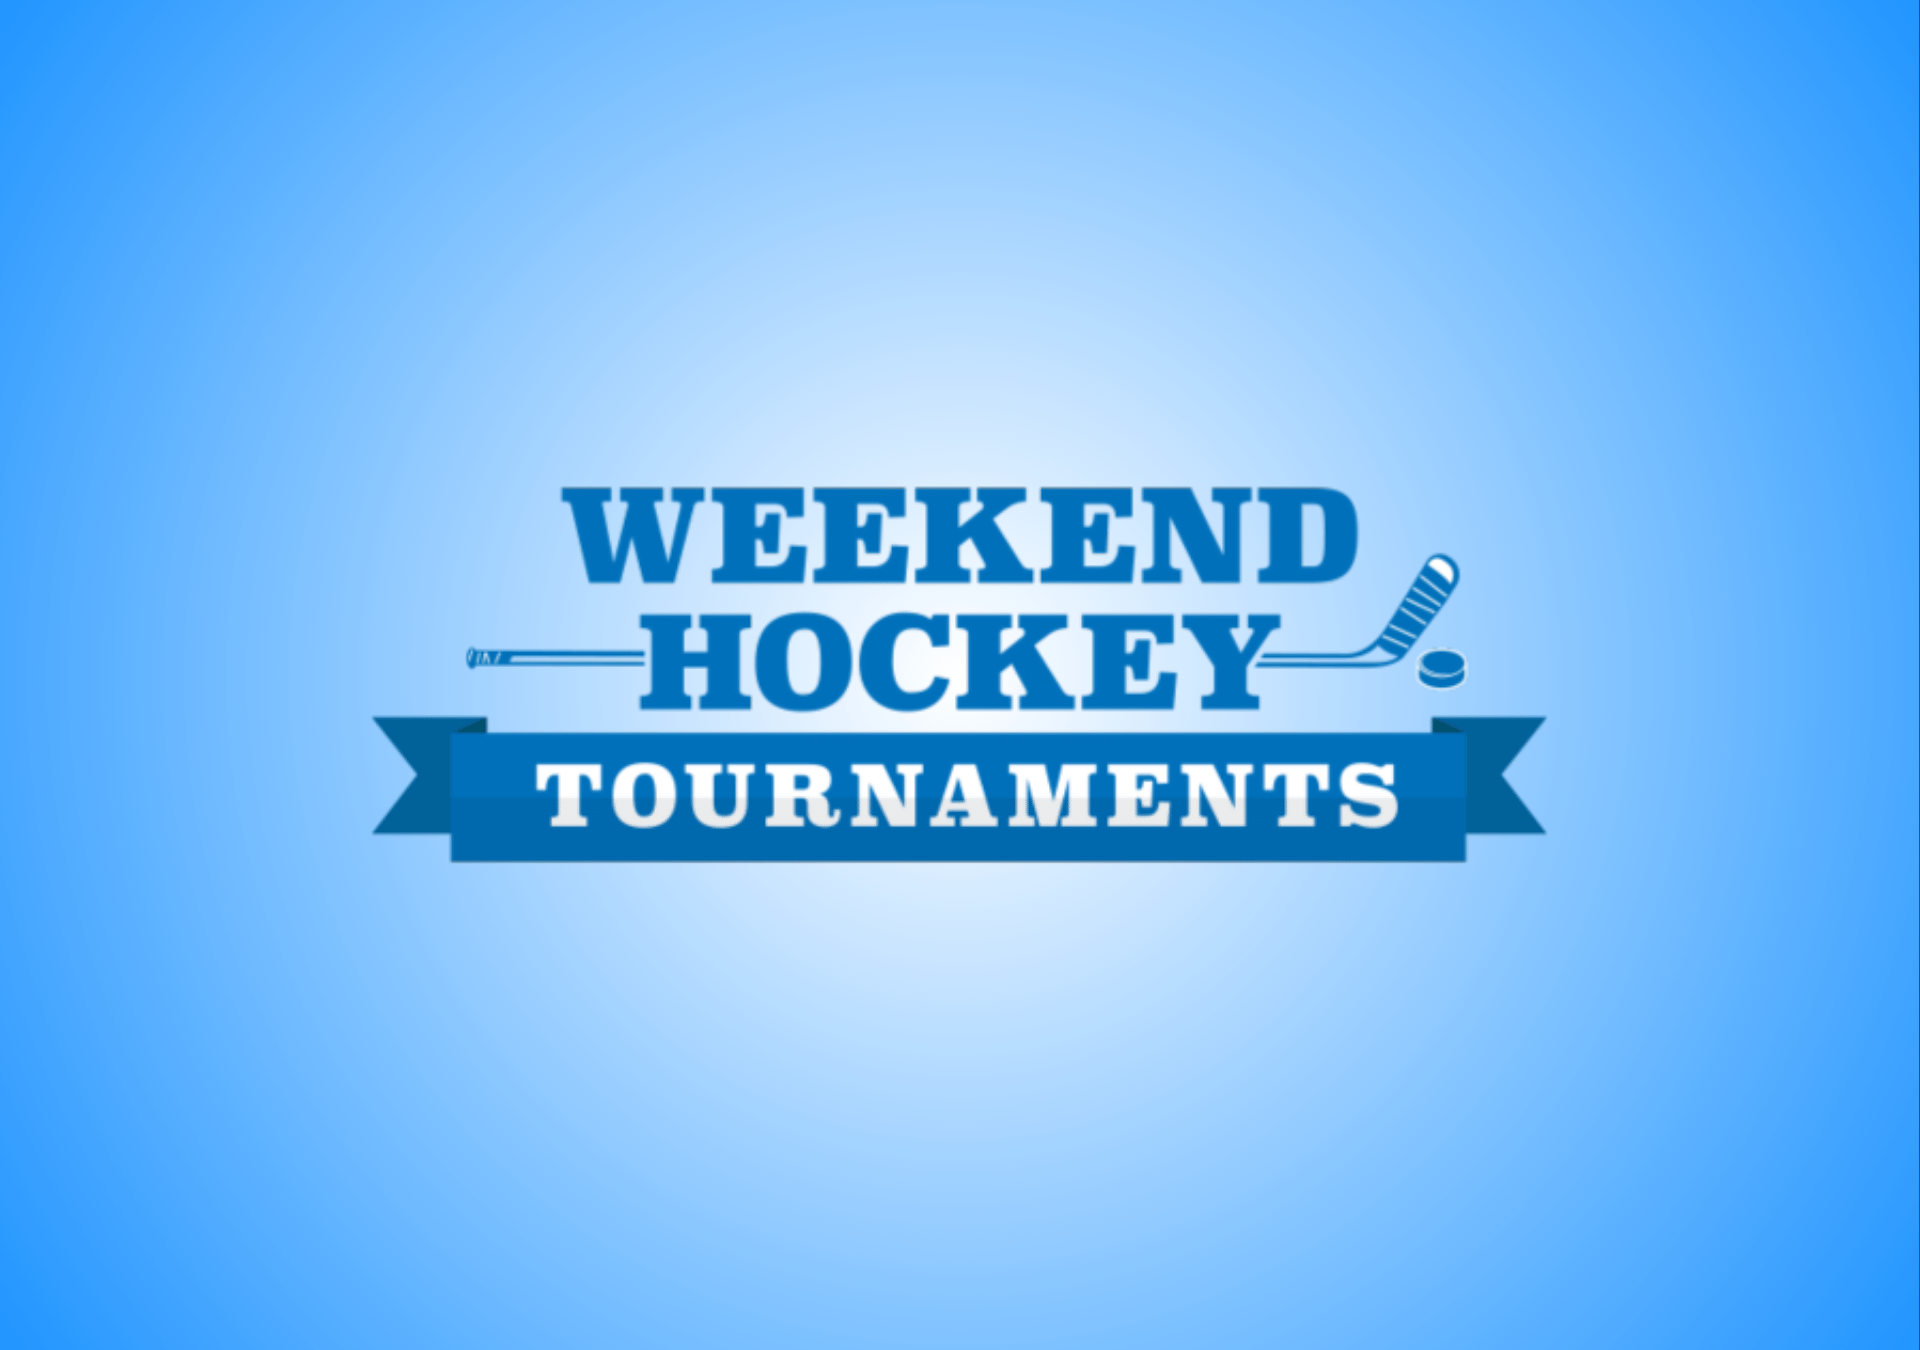 Weekend Hockey Tournaments Official Merchandise